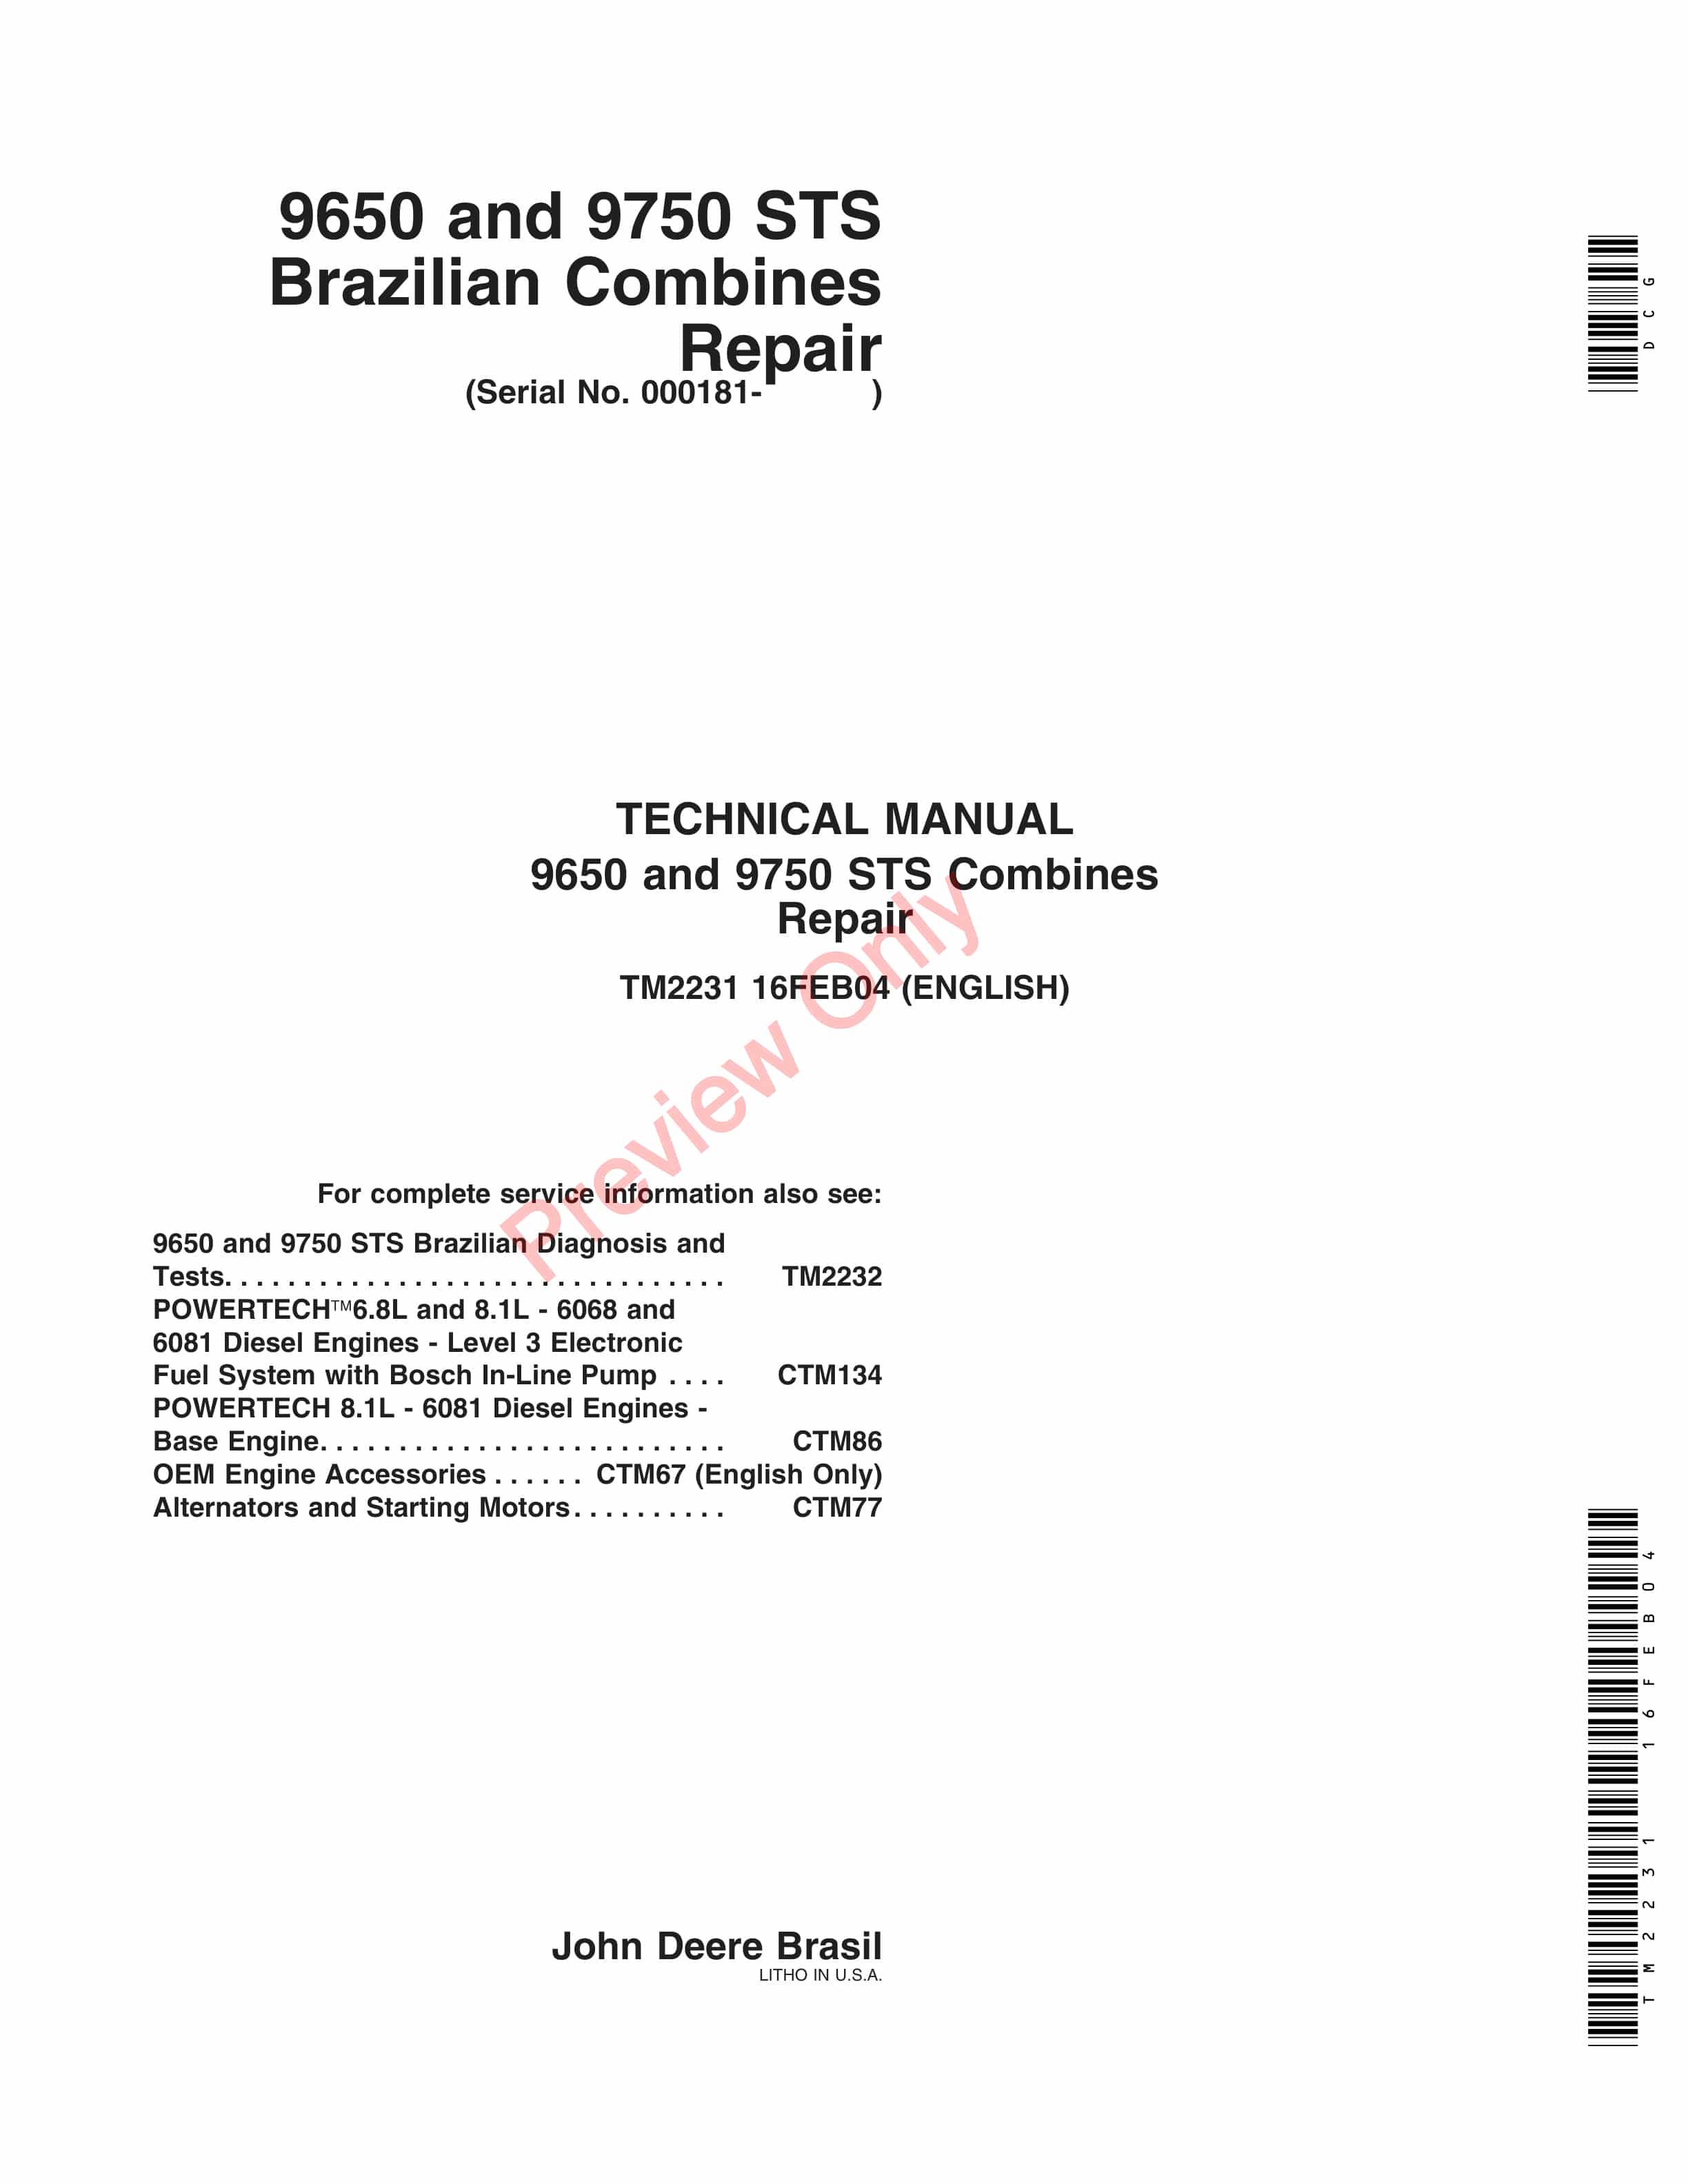 John Deere 9650 STS 9750 STS Brazilian Combines Technical Manual TM2231 16FEB04 1